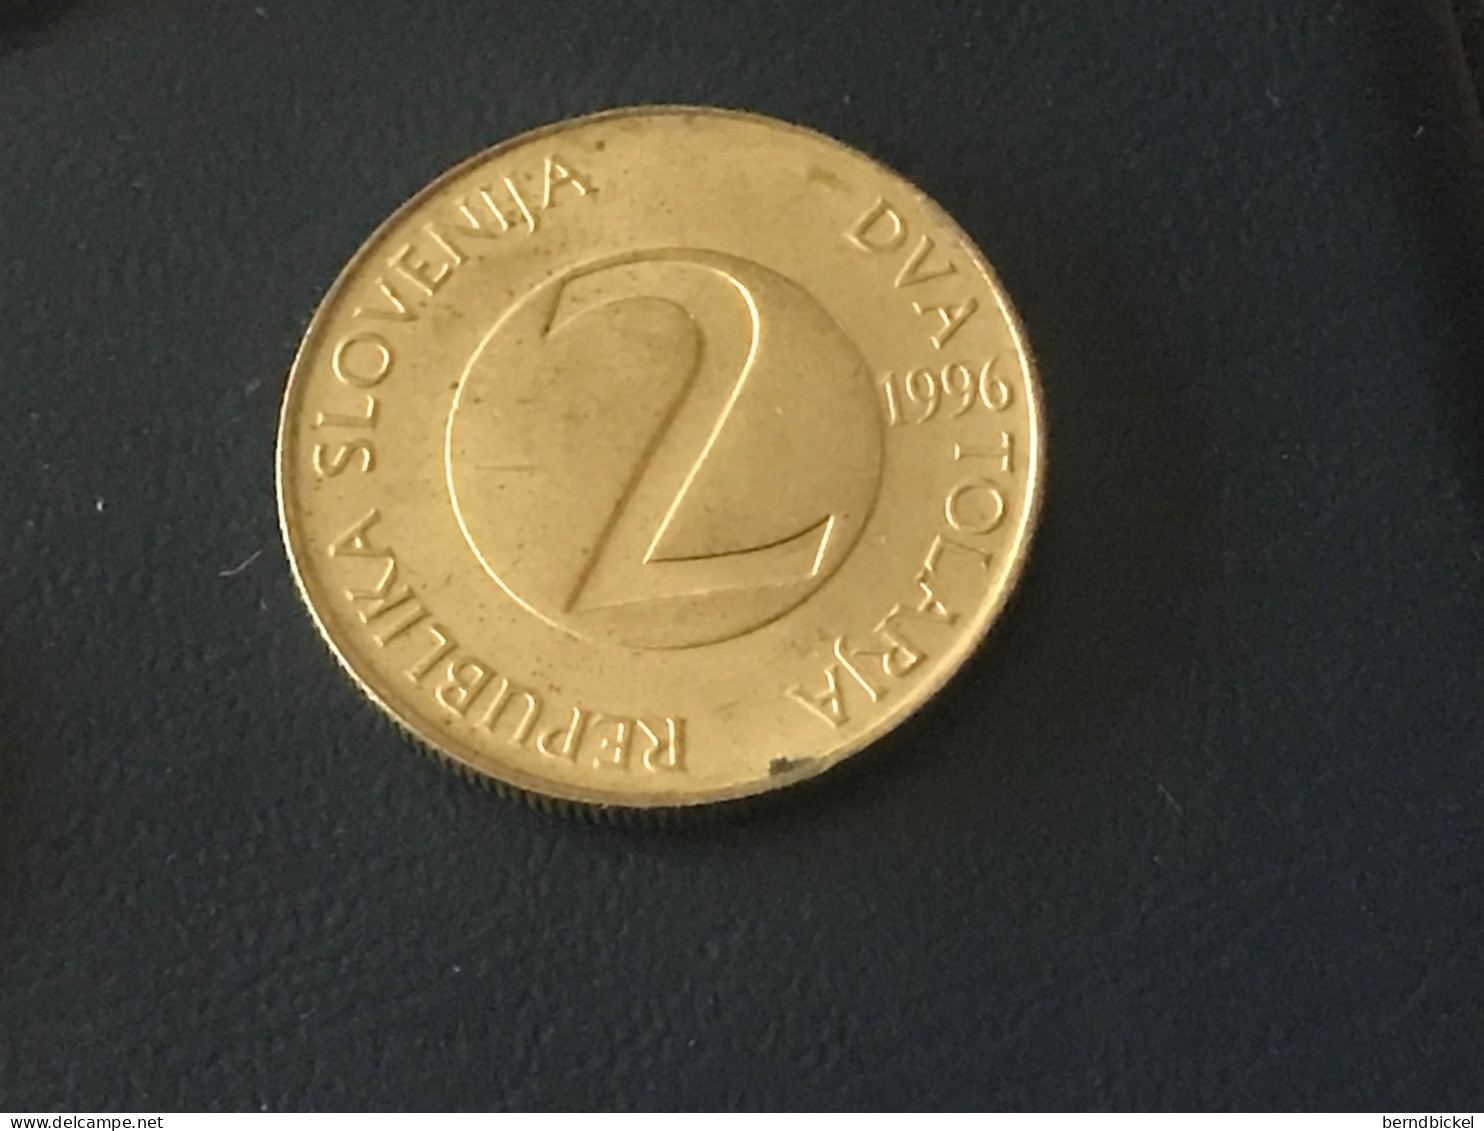 Münze Münzen Umlaufmünze Slowenien 2 Tolar 1996 - Slovenia